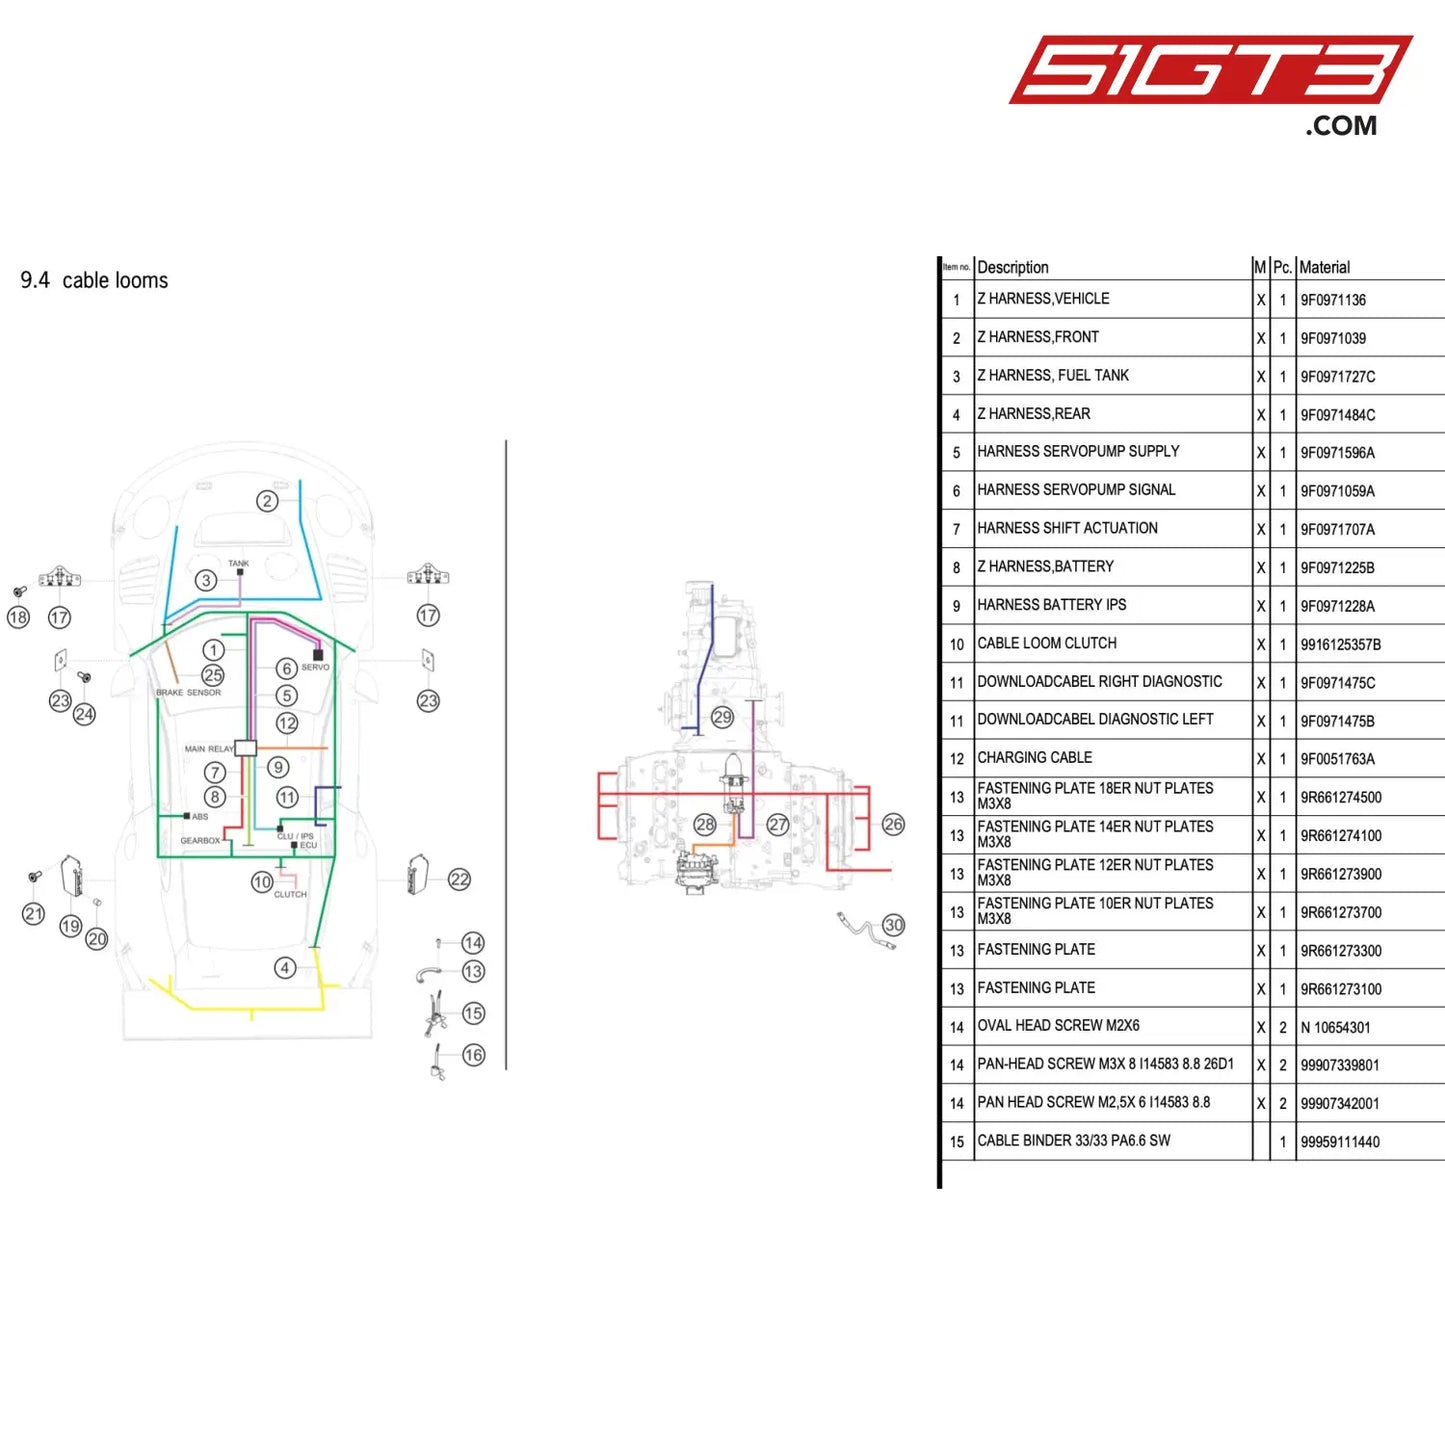 Fastening Plate 14Er Nut Plates M3X8 - 9R661274100 [Porsche 911 Gt3 R Type 991 (Gen 2)] Cable Looms